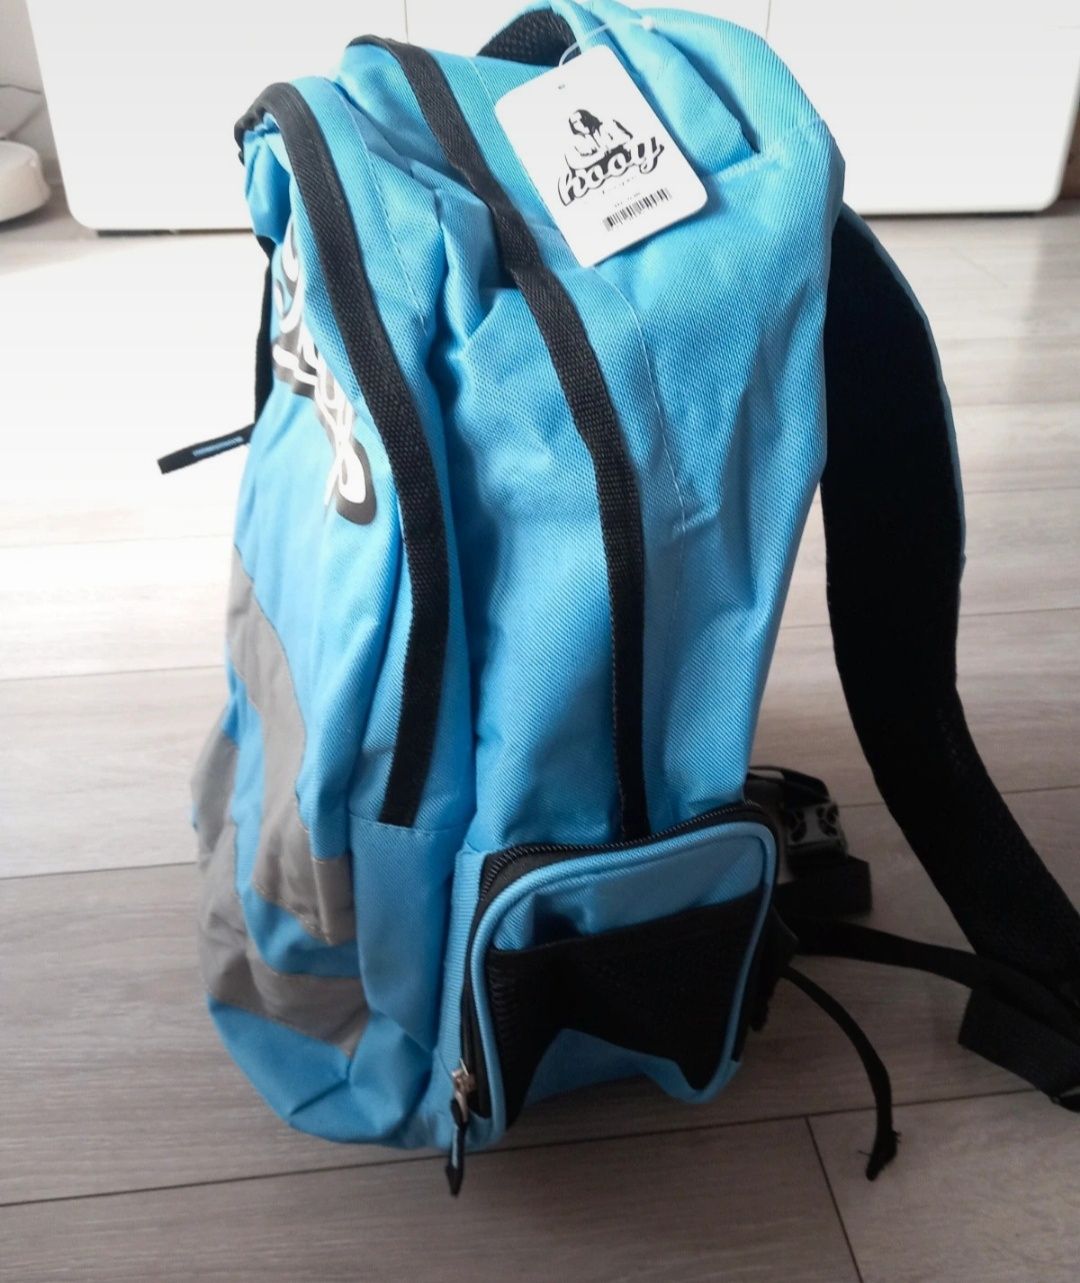 Plecak szkolny Hooy , mieści A4 nowy